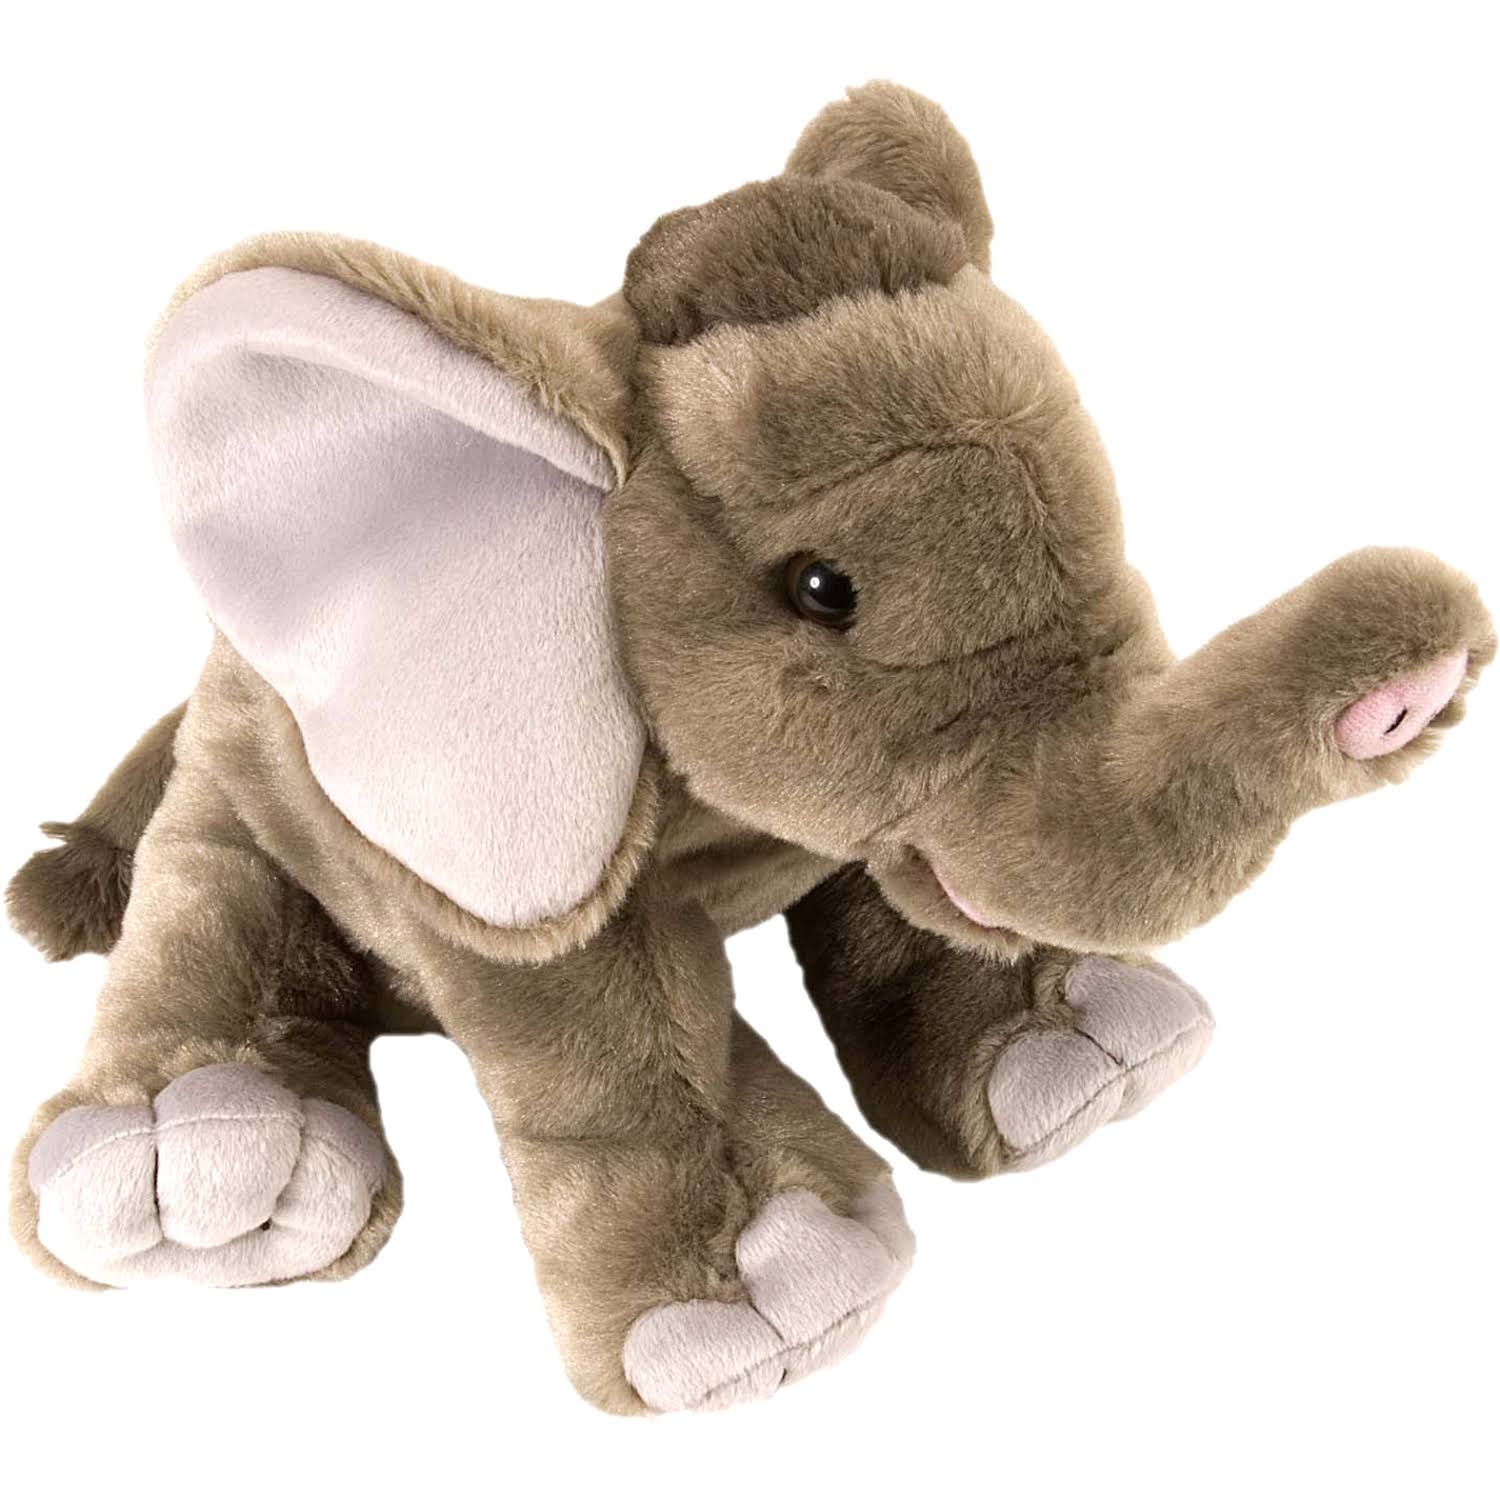 Wild Republic Cuddlekin Stuffed Animal Plush Toy - Baby Elephant, 12"